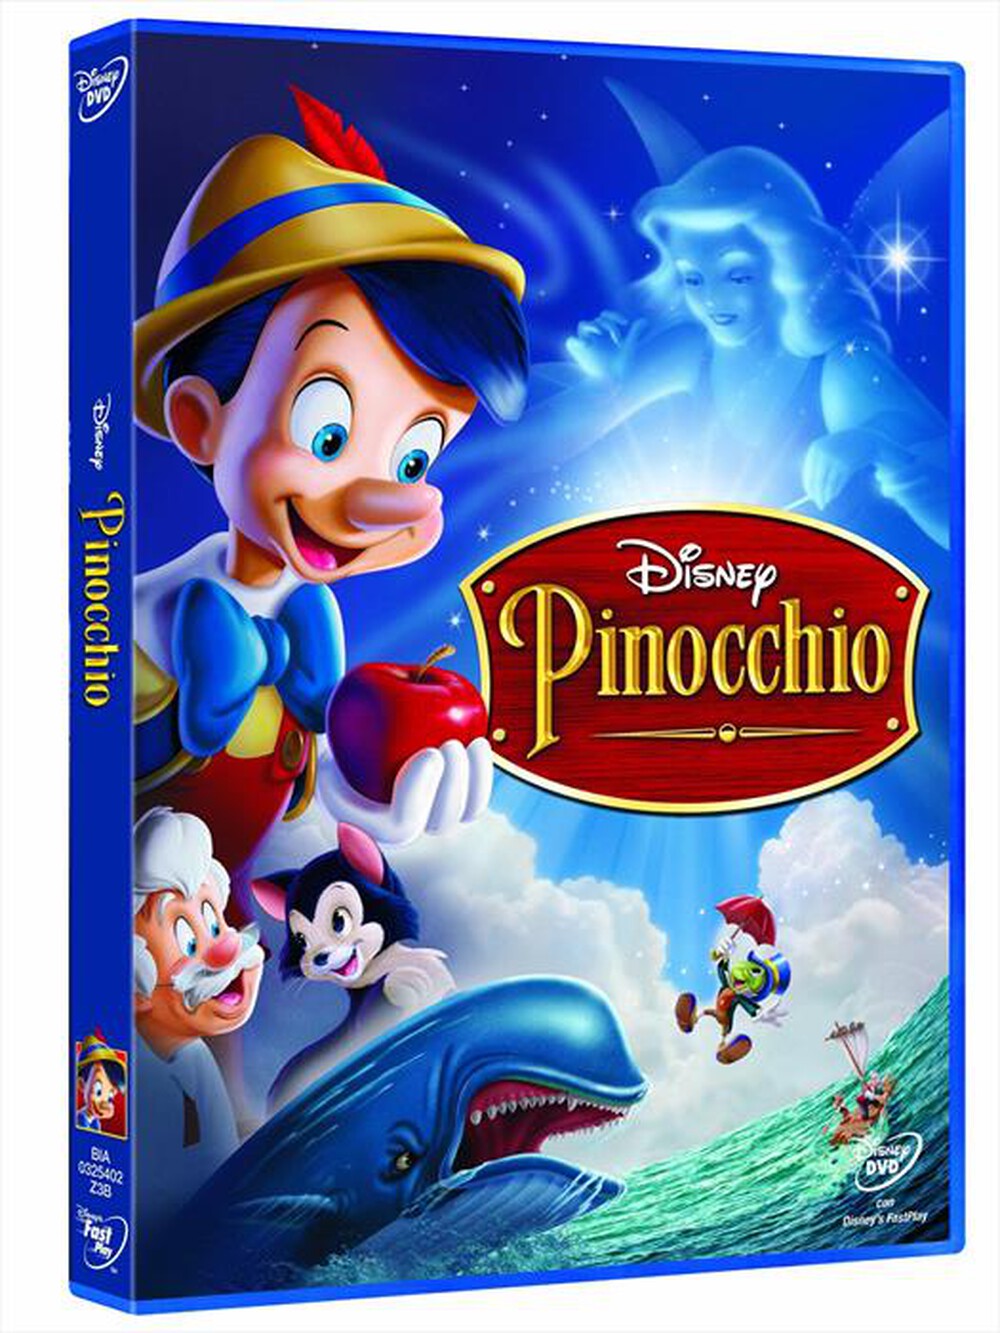 "WALT DISNEY - Pinocchio - "